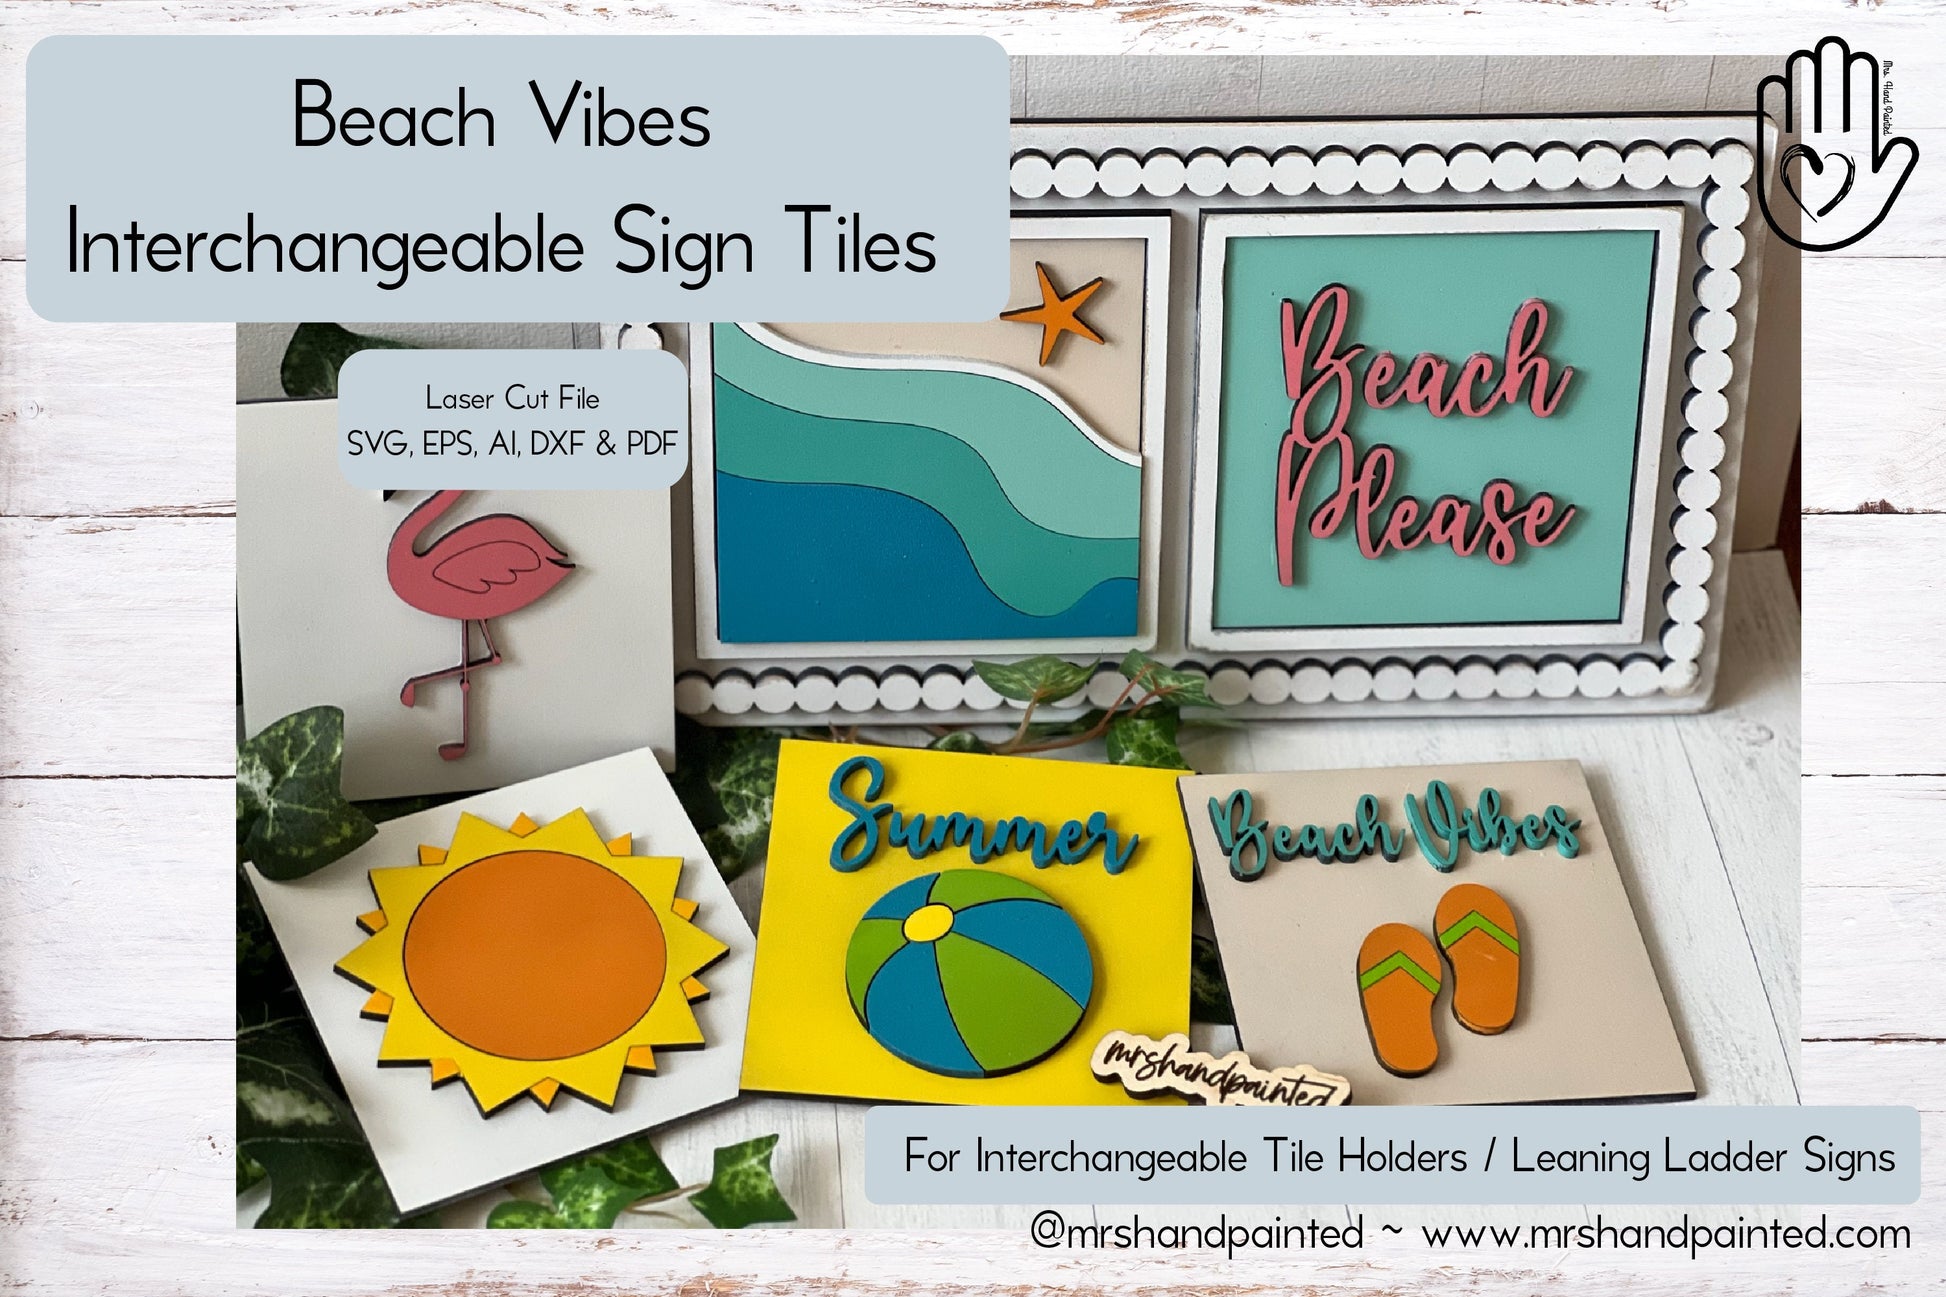 Laser Cut File - Beach Vibes Summer Interchangeable Sign Tiles - Digital Download SVG, AI files